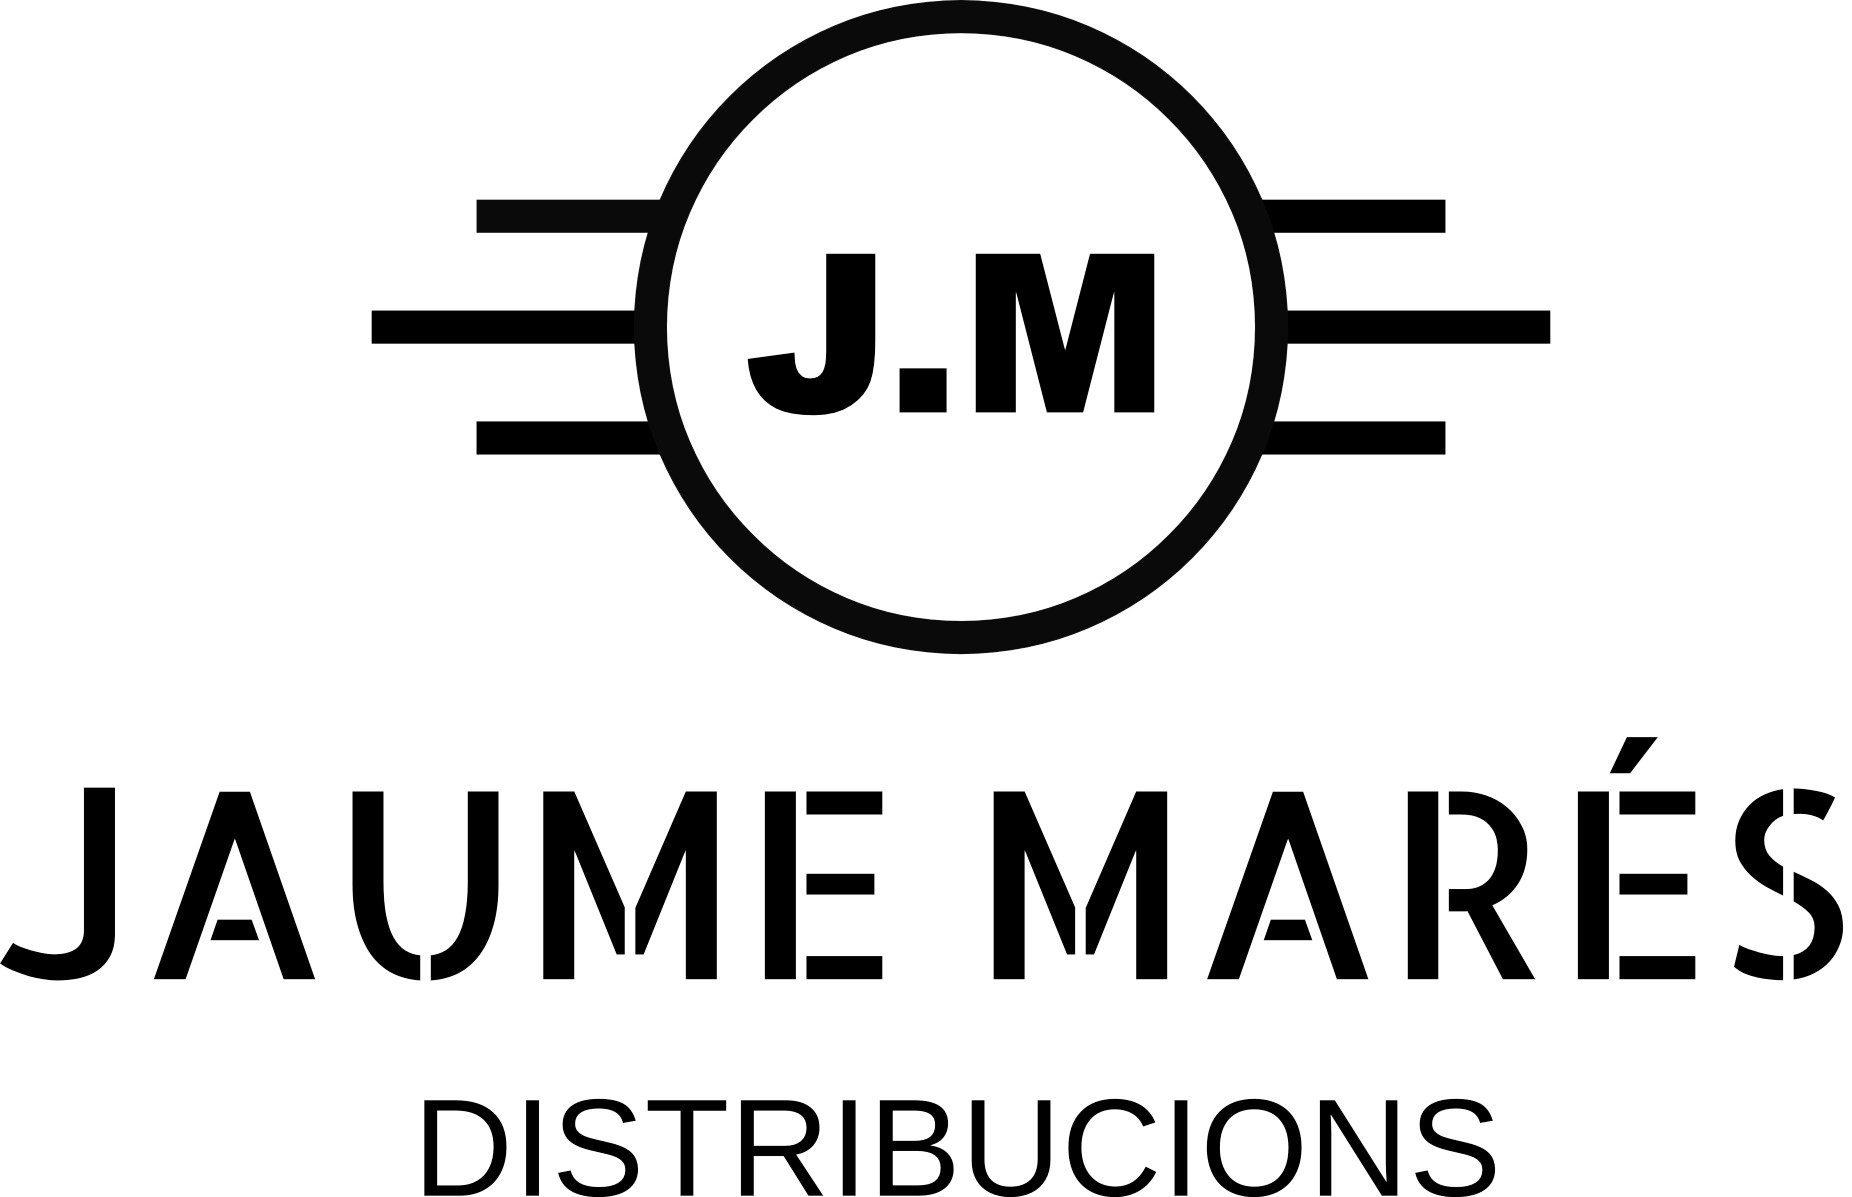 (c) Jaumemares.com